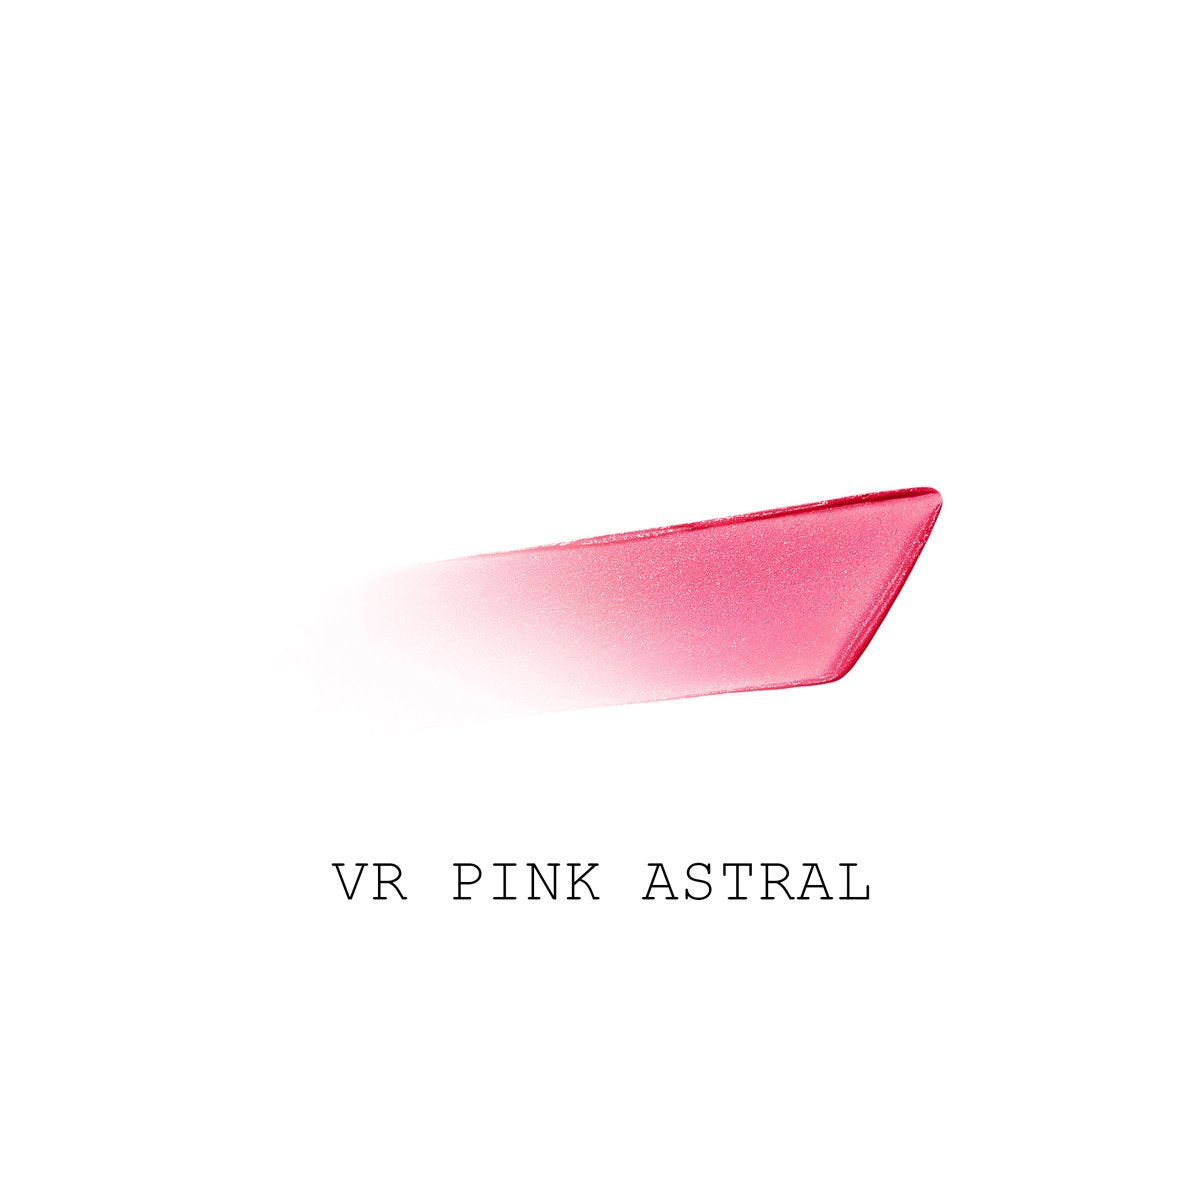 Pat McGrath Lip Fetish Astral Lip Balm VR Pink Astral 619, 3g